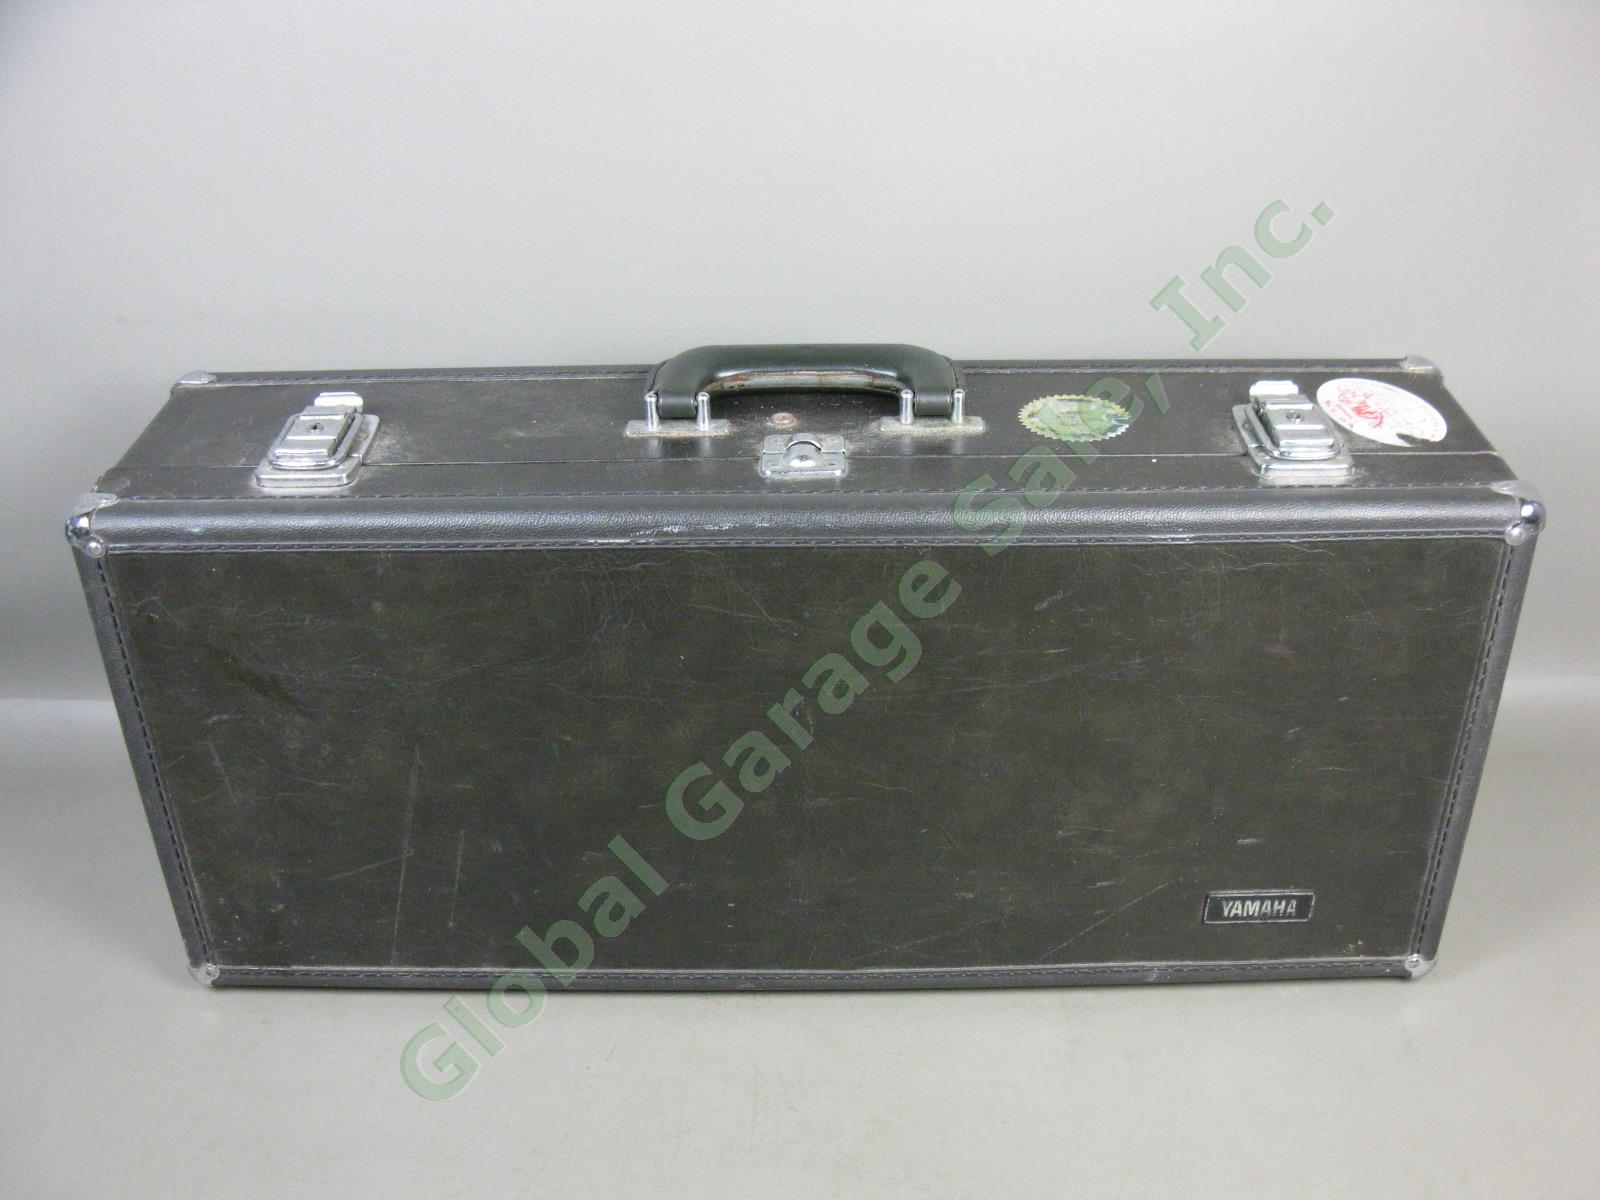 Vtg Yamaha YAS-21 Alto Saxophone W/ Case As-Is Parts/Repair Serial 016985 1975? 12